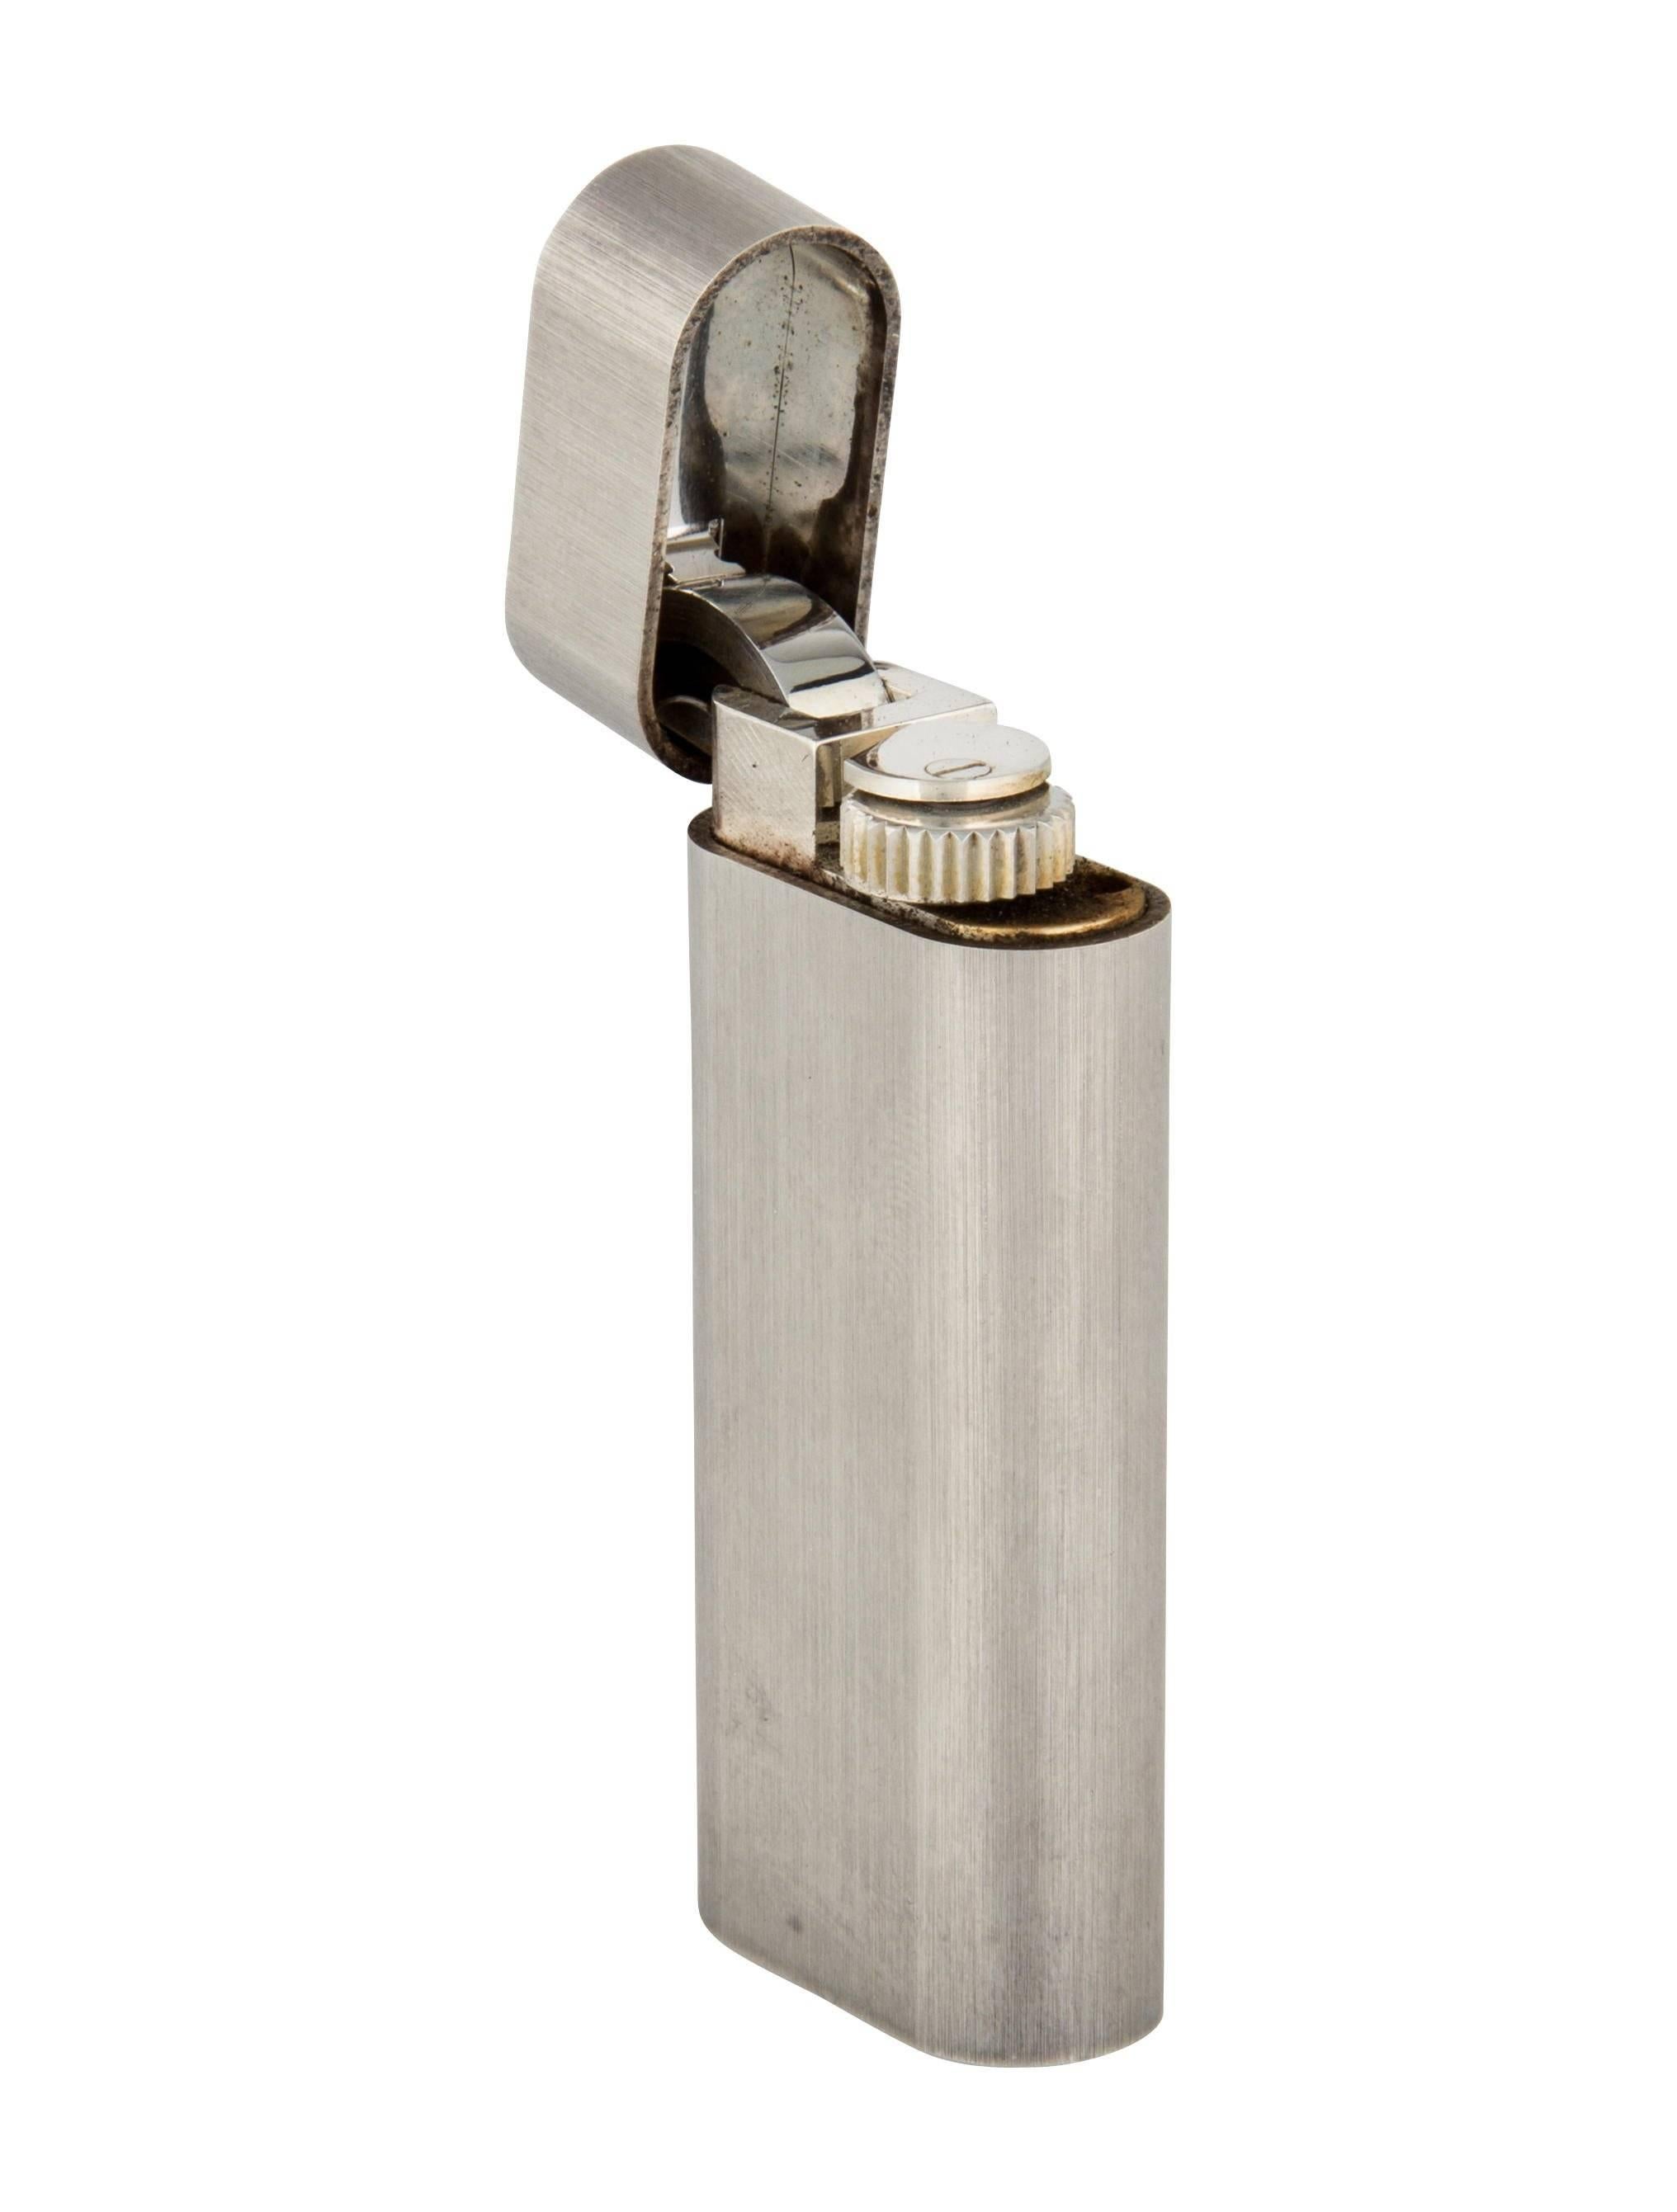 Cartier Textured Silver Metal Men's Cigar Cigarette Lighter in Box

Metal
Silver tone
Measures 1" W x 2.25" H x 0.50" D 
Includes original Cartier box